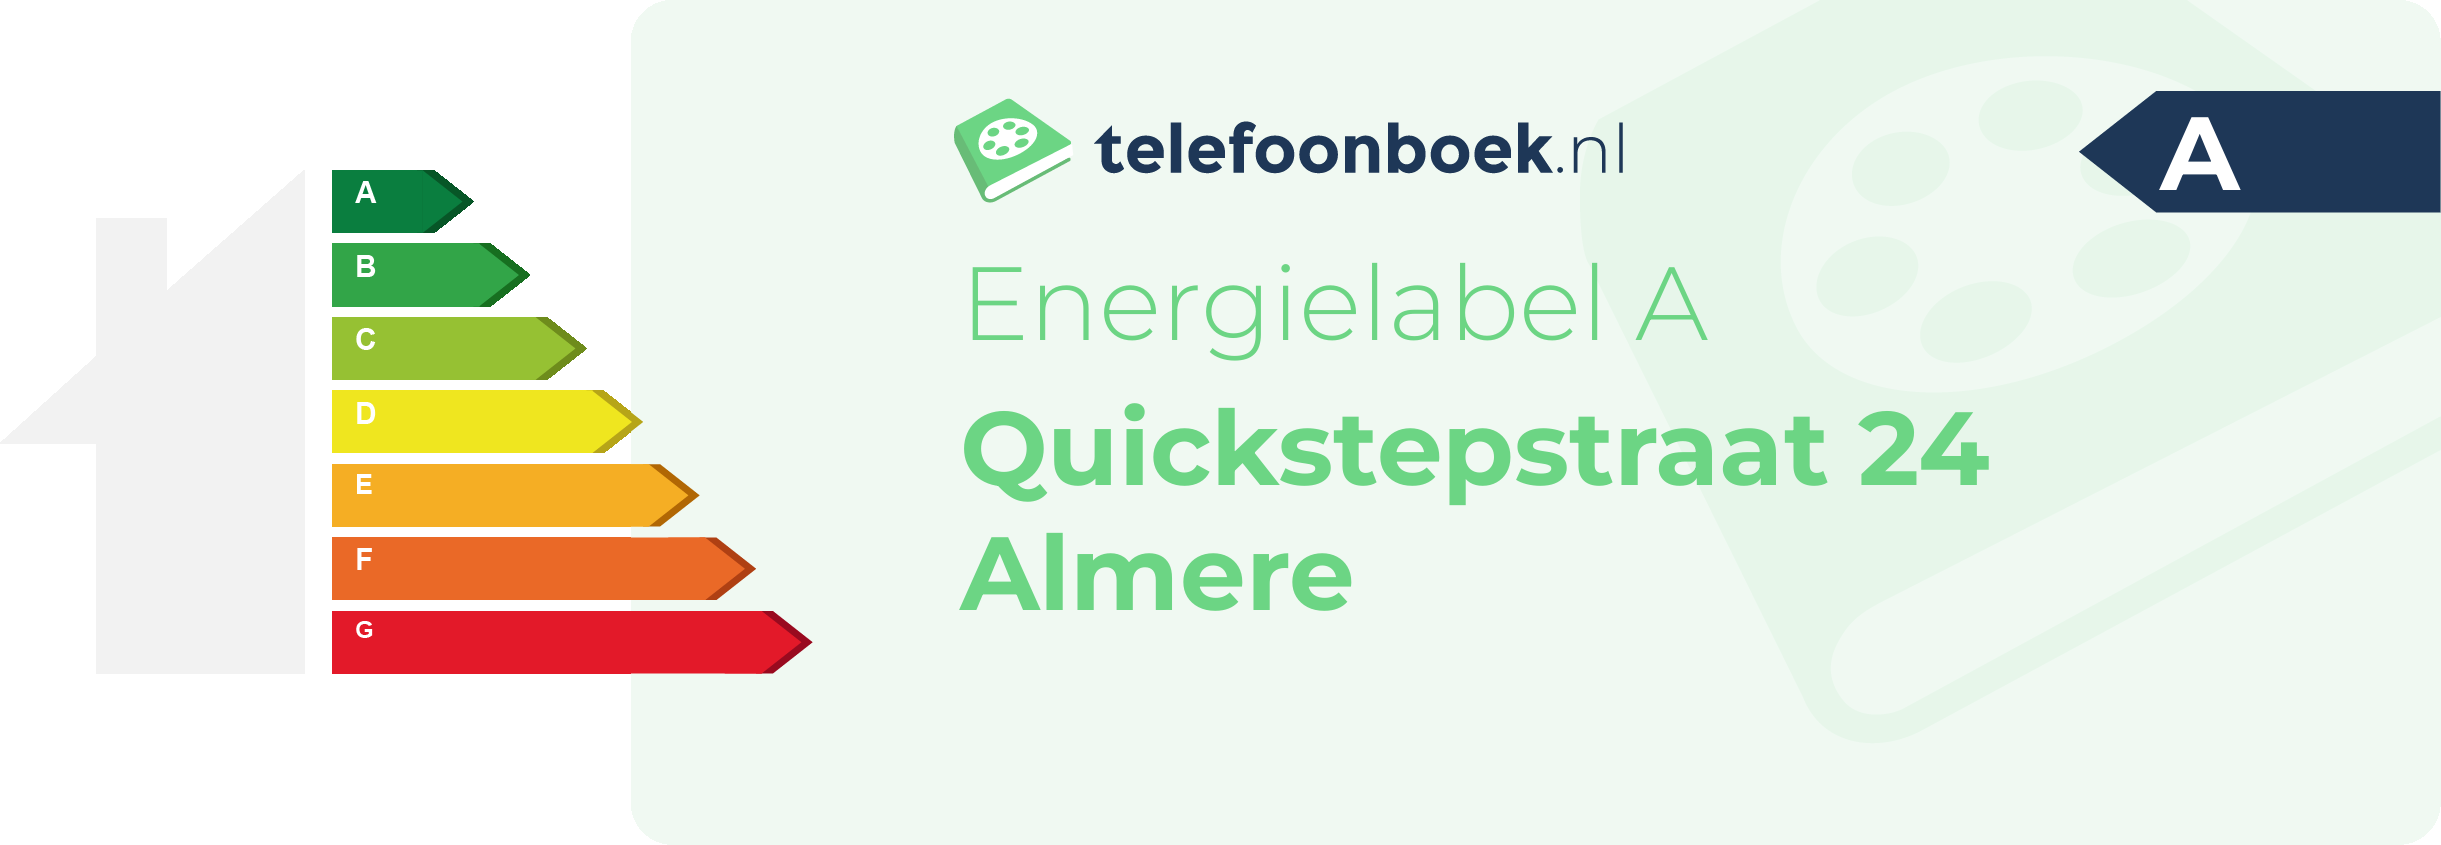 Energielabel Quickstepstraat 24 Almere